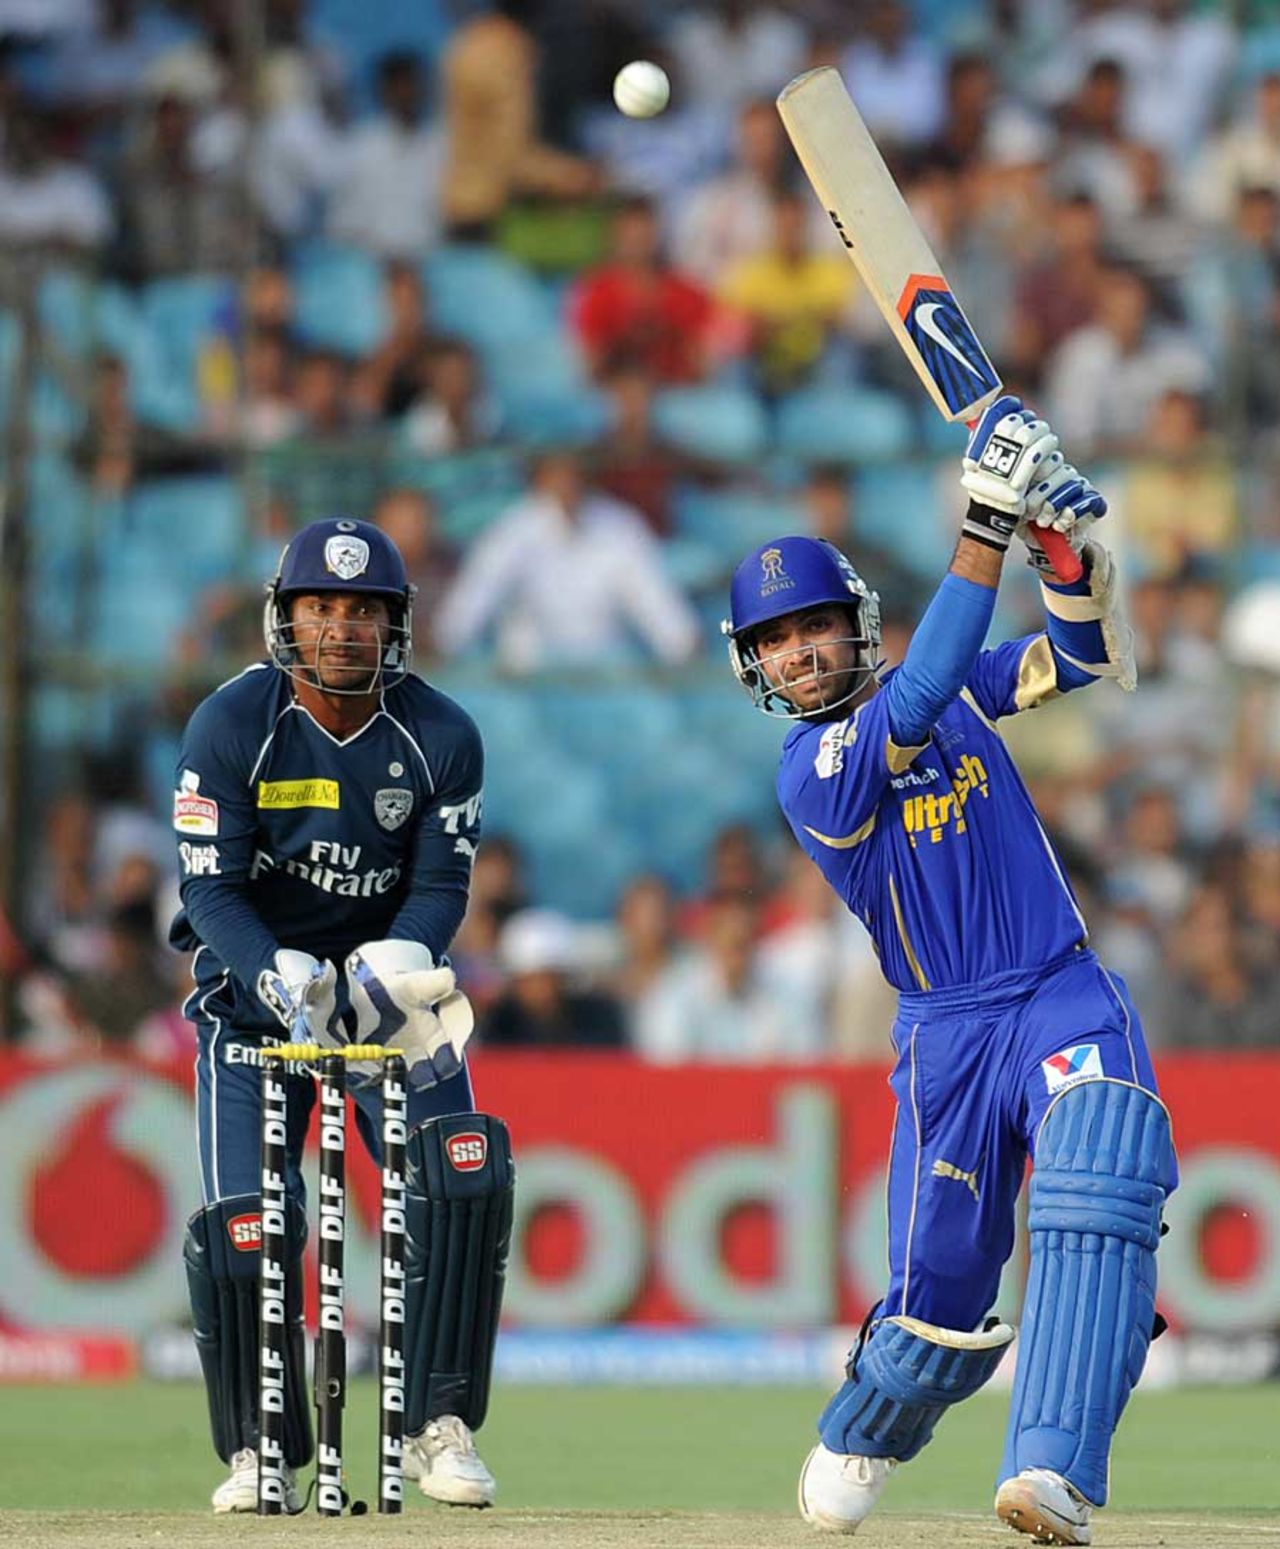 Ajinkya Rahane smashes one over mid-off, Rajasthan Royals v Deccan Chargers, IPL 2012, Jaipur, April 17, 2012